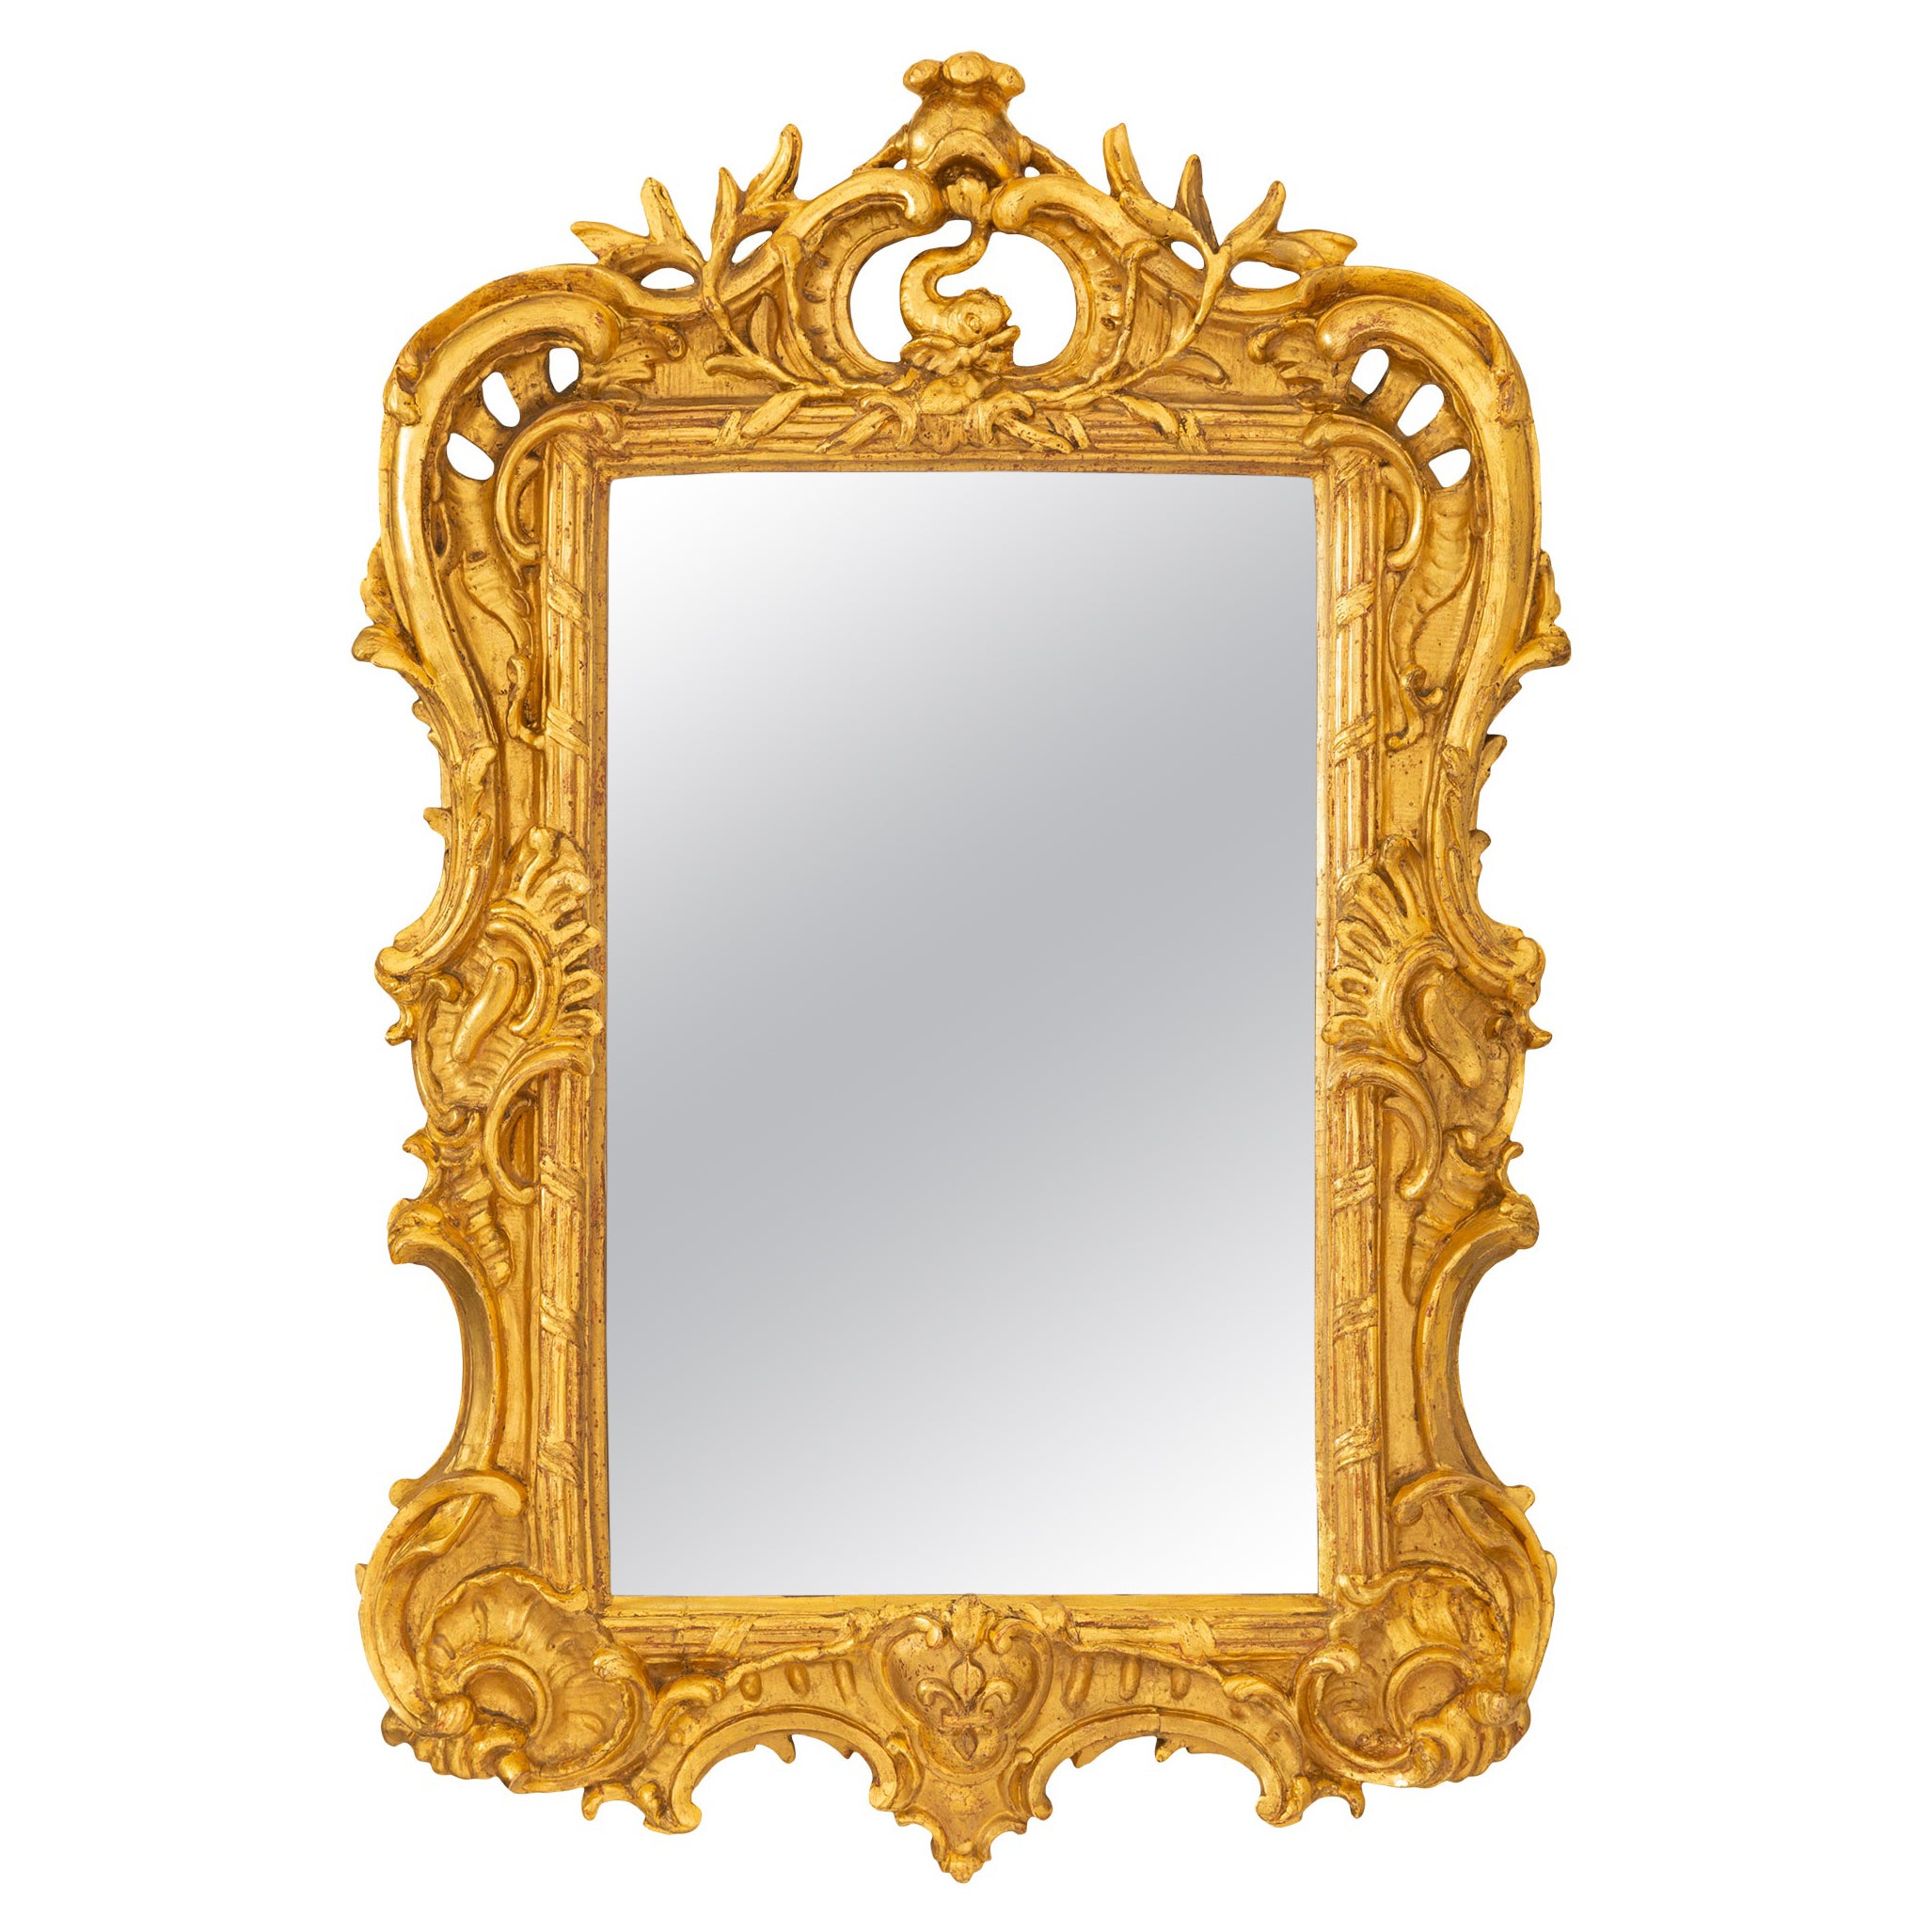 French Mid 18th Century Louis XV Period Giltwood Mirror